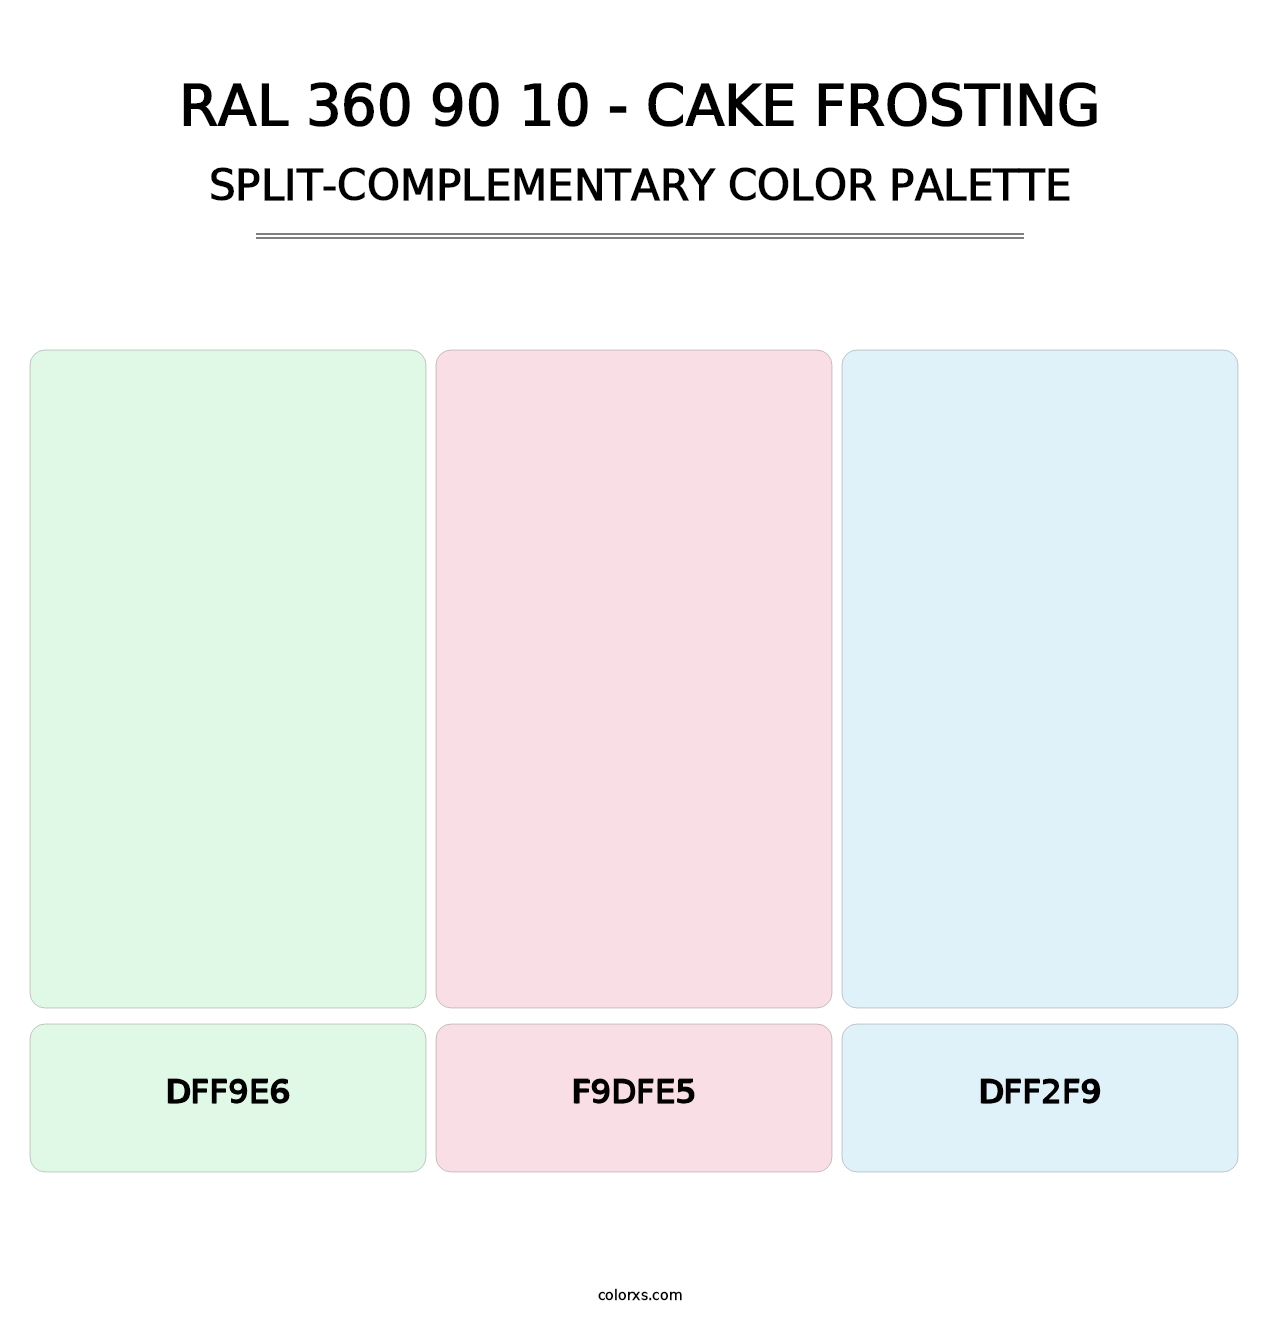 RAL 360 90 10 - Cake Frosting - Split-Complementary Color Palette